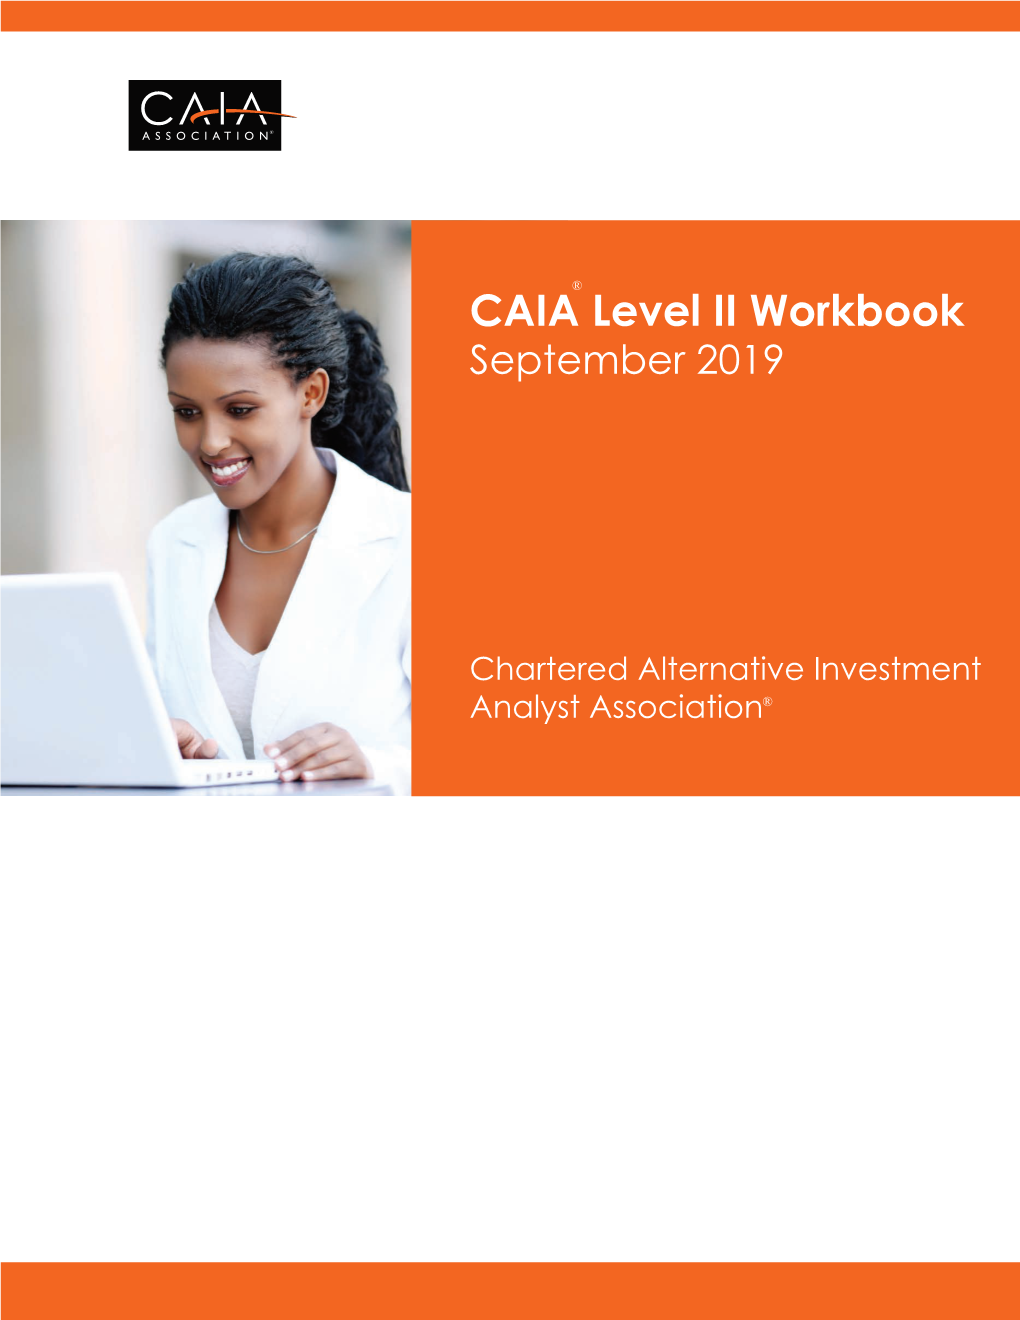 CAIA Level II Workbook September 2019